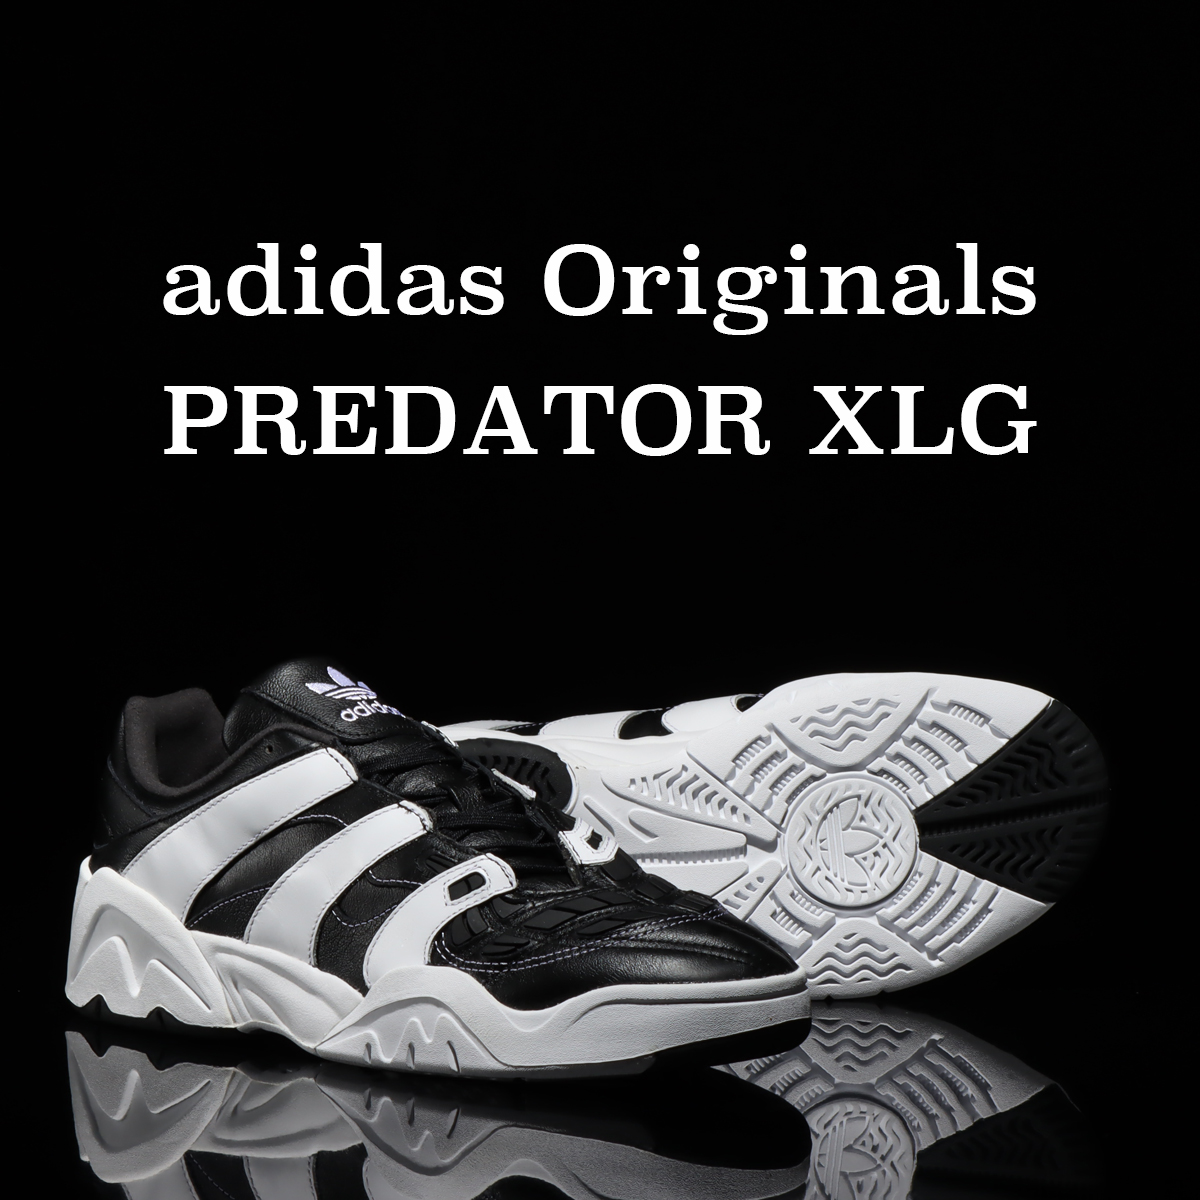 adidas PREDATOR XLG(アディダス プレデター エクストララージ)COREBLACK/FOOTWEAR WHITE/COREBLACK【メンズ スニーカー】23FW-S at20-c画像